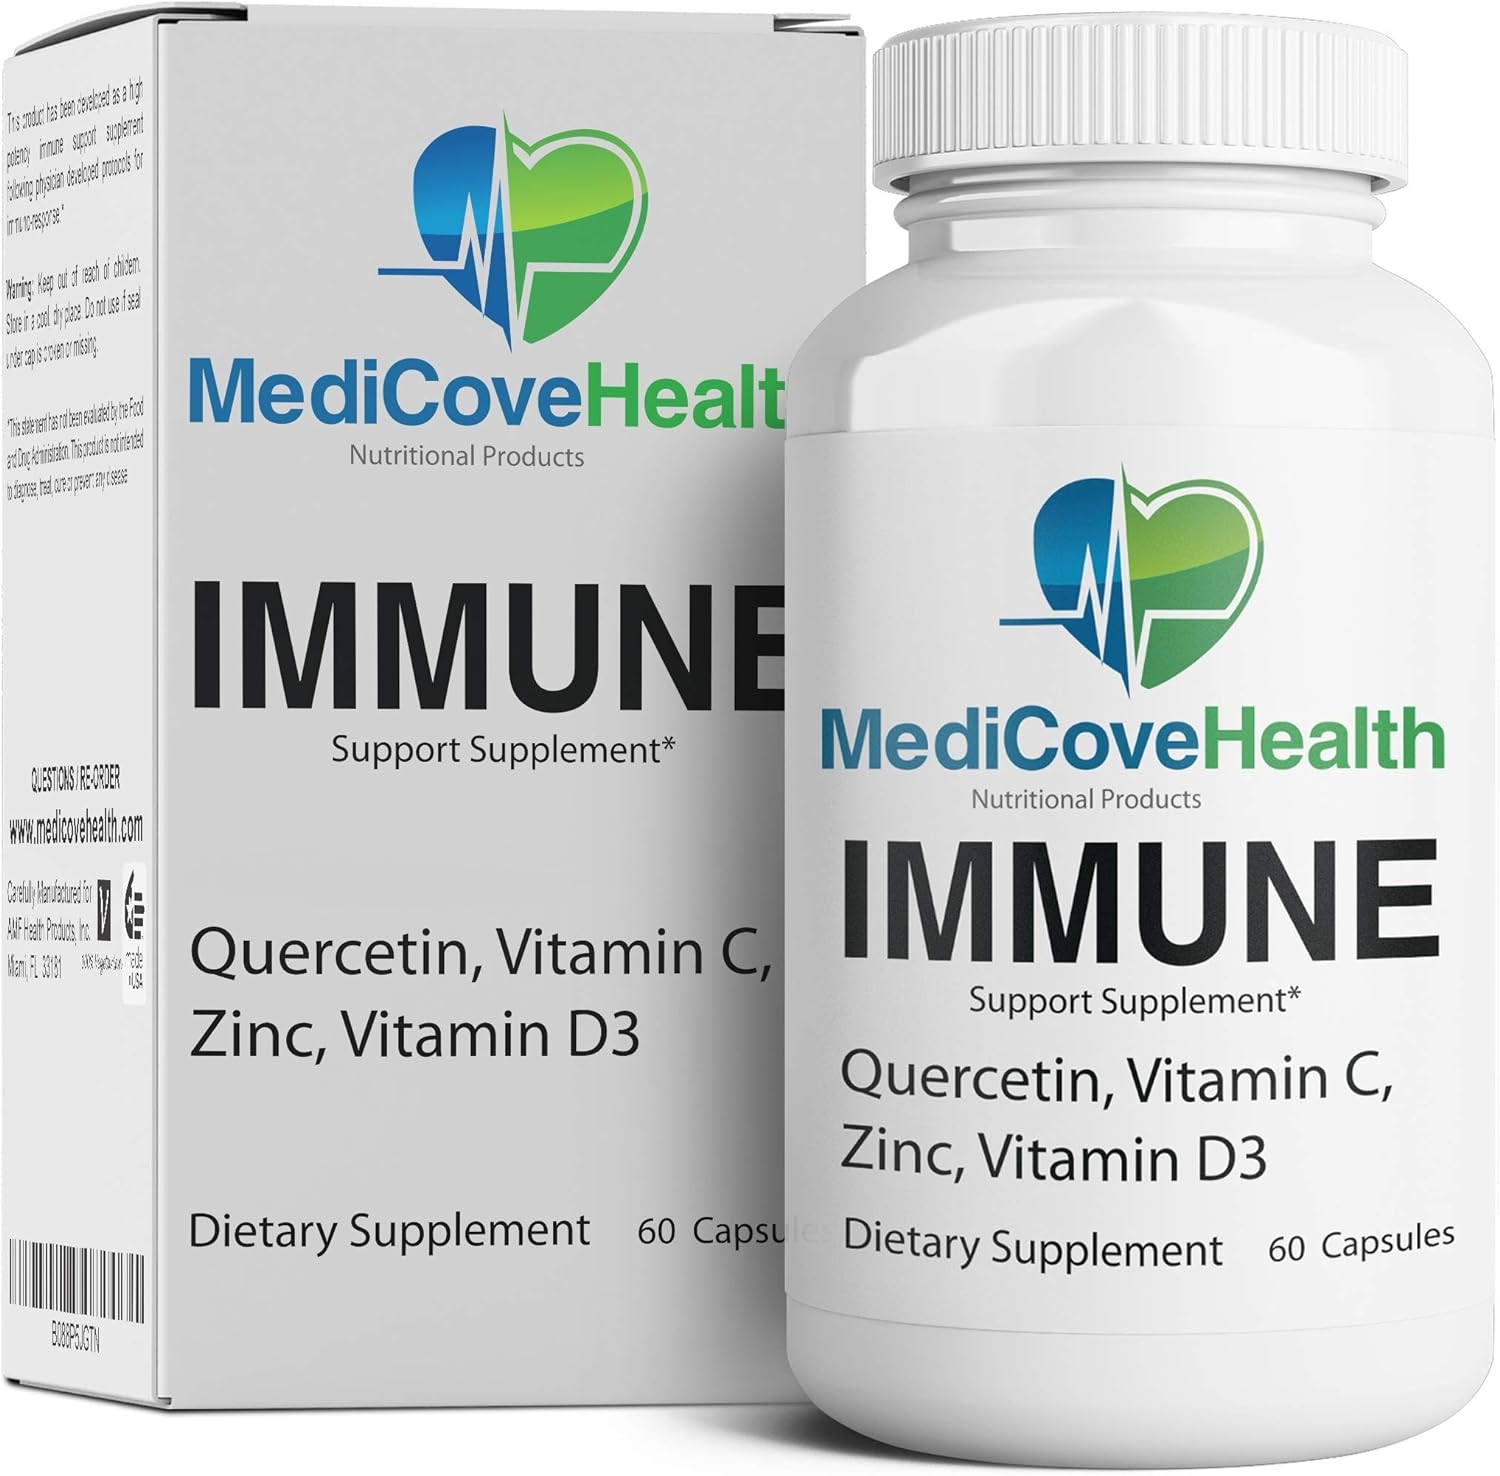 Immune Support: Quercetin, Vitamin C, Zinc, Vitamin D3